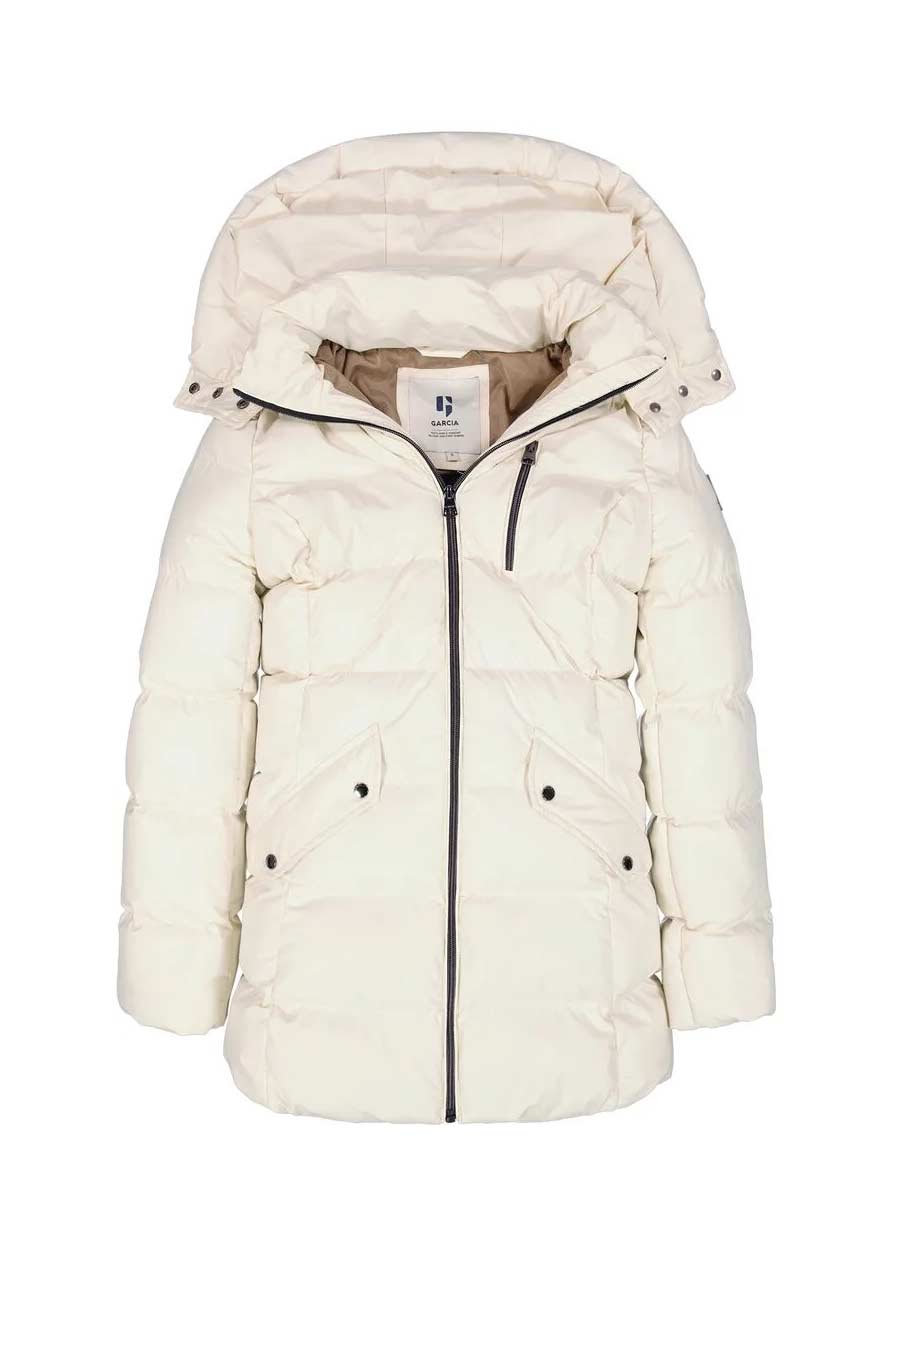 GARCIA GARCIA Μπουφάν GJ300902_ladies outdoor jacket - WHITE-GARCIAGJ300902-323-WHITE